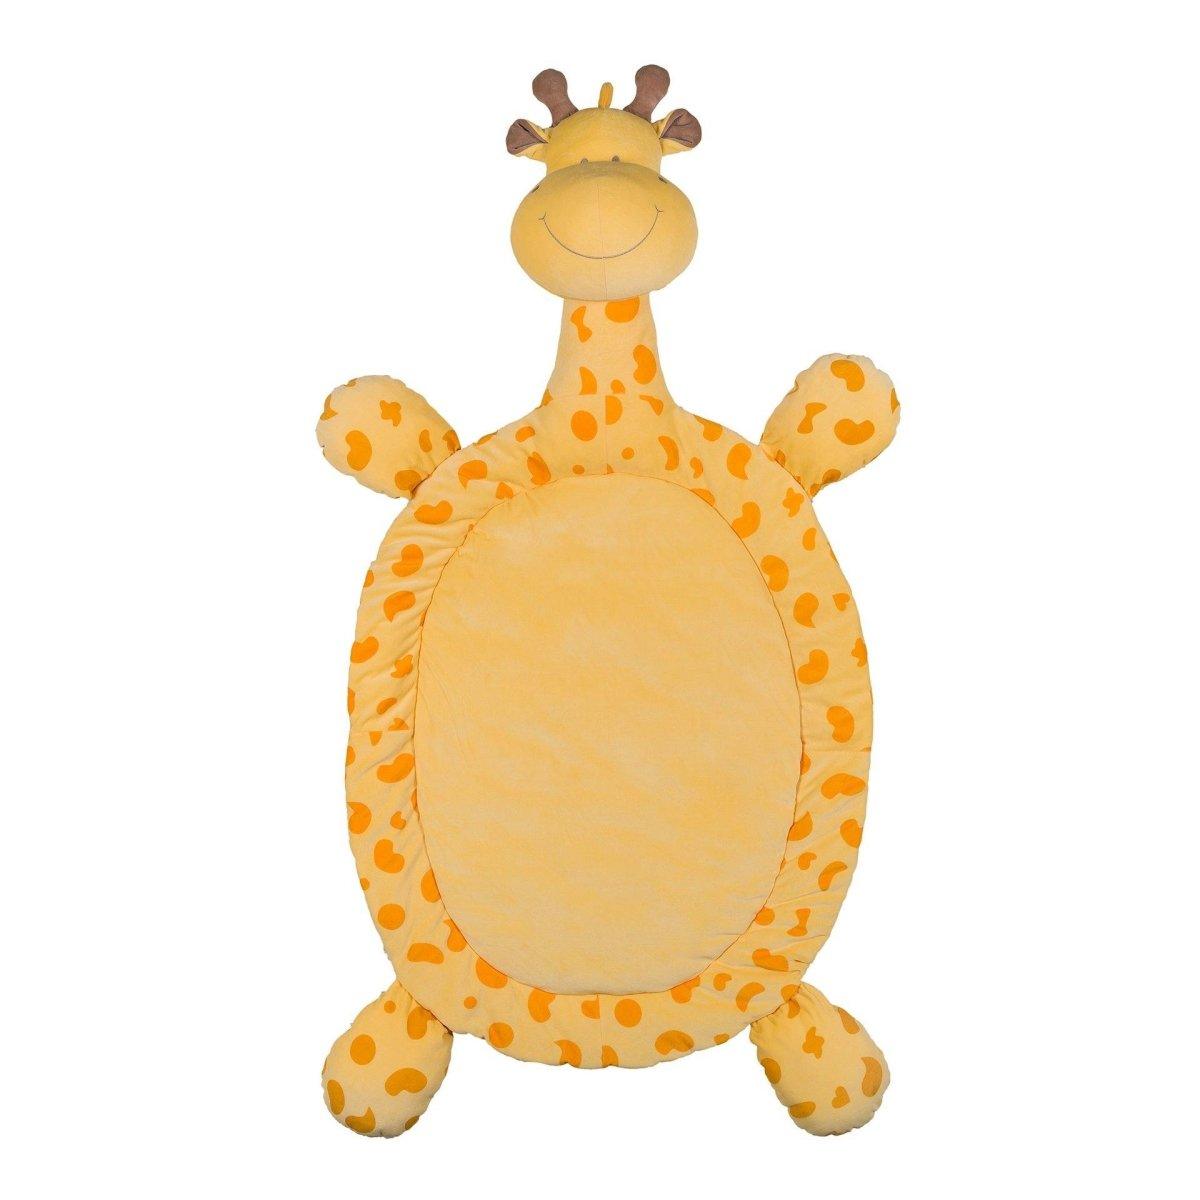 Loc De Joaca Girafa Trilli Plus Portocaliu Bebelusi Nanan 2118